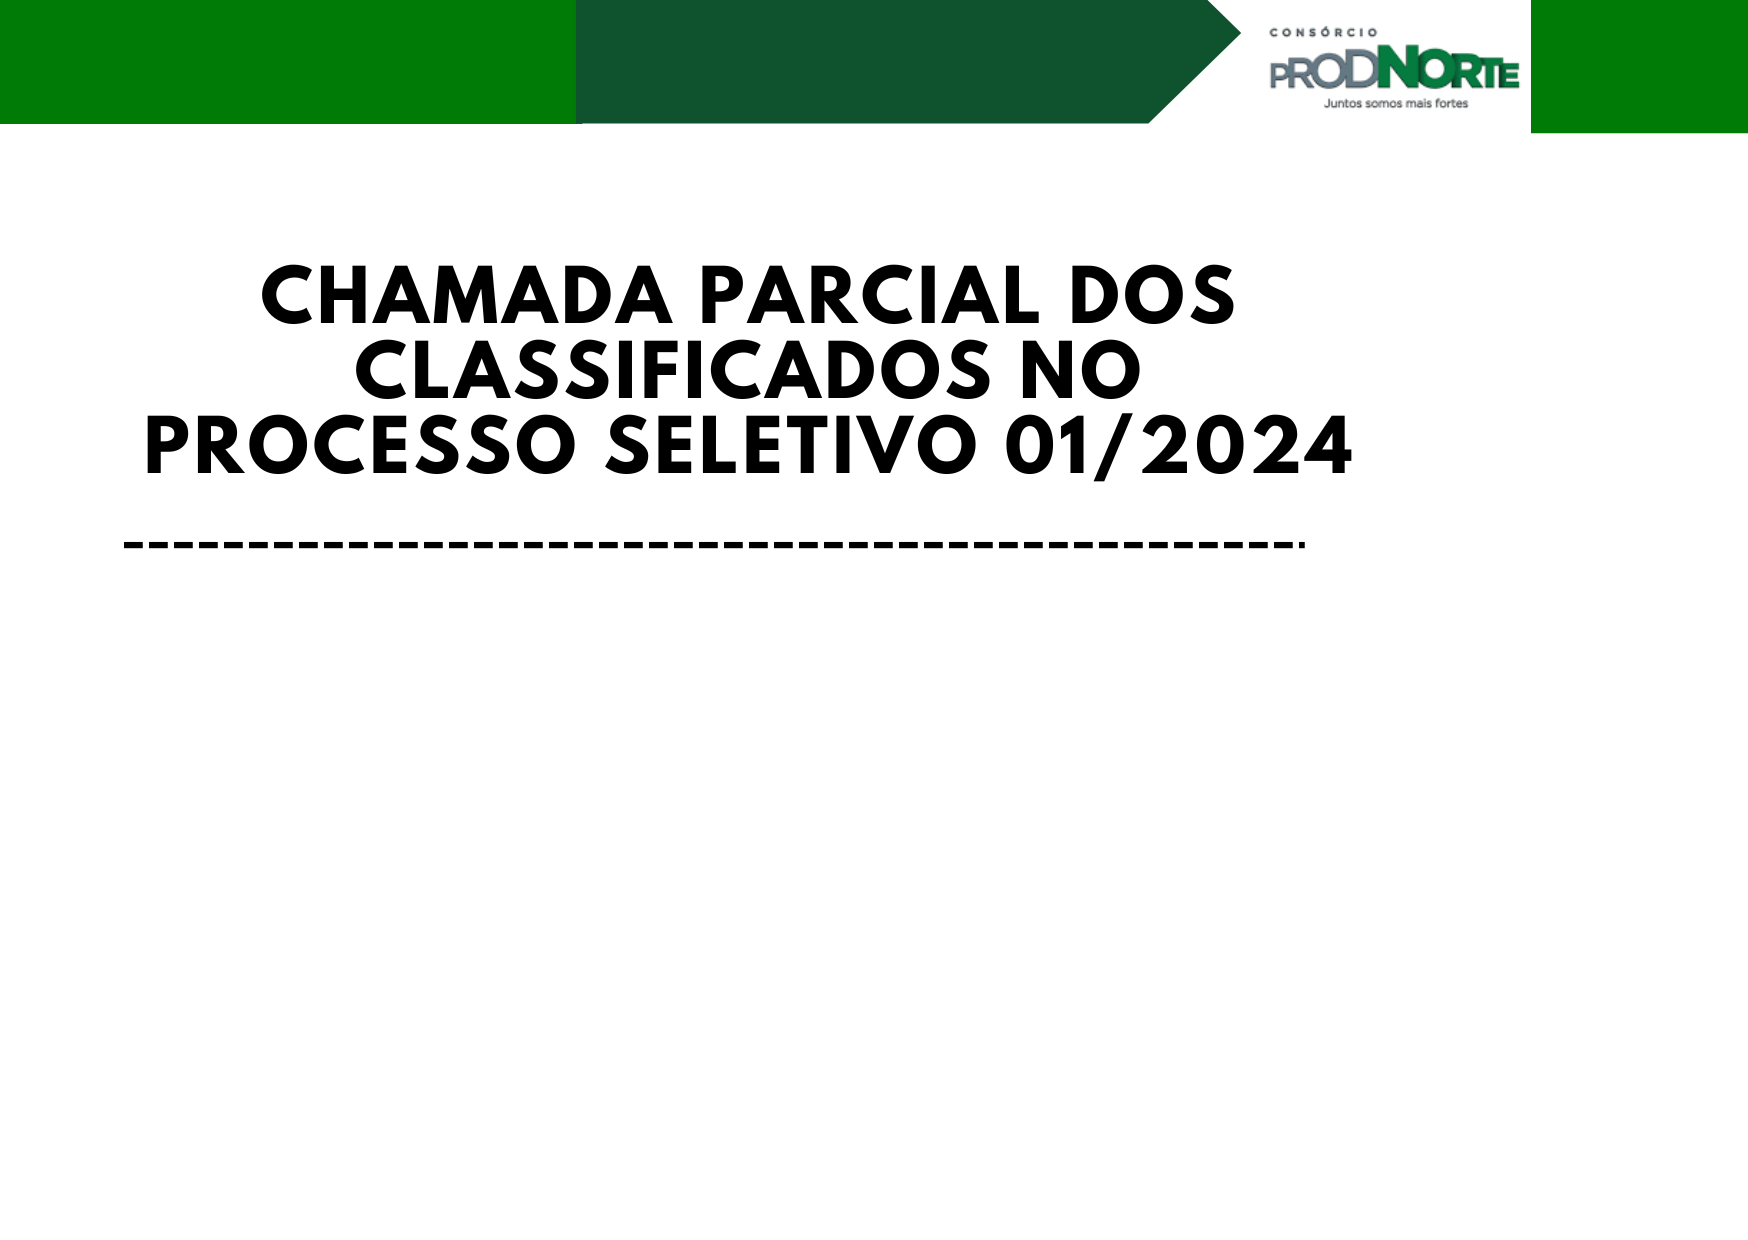 CHAMADA PARCIAL DOS CLASSIFICADOS NO PROCESSO SELETIVO 01/2024'